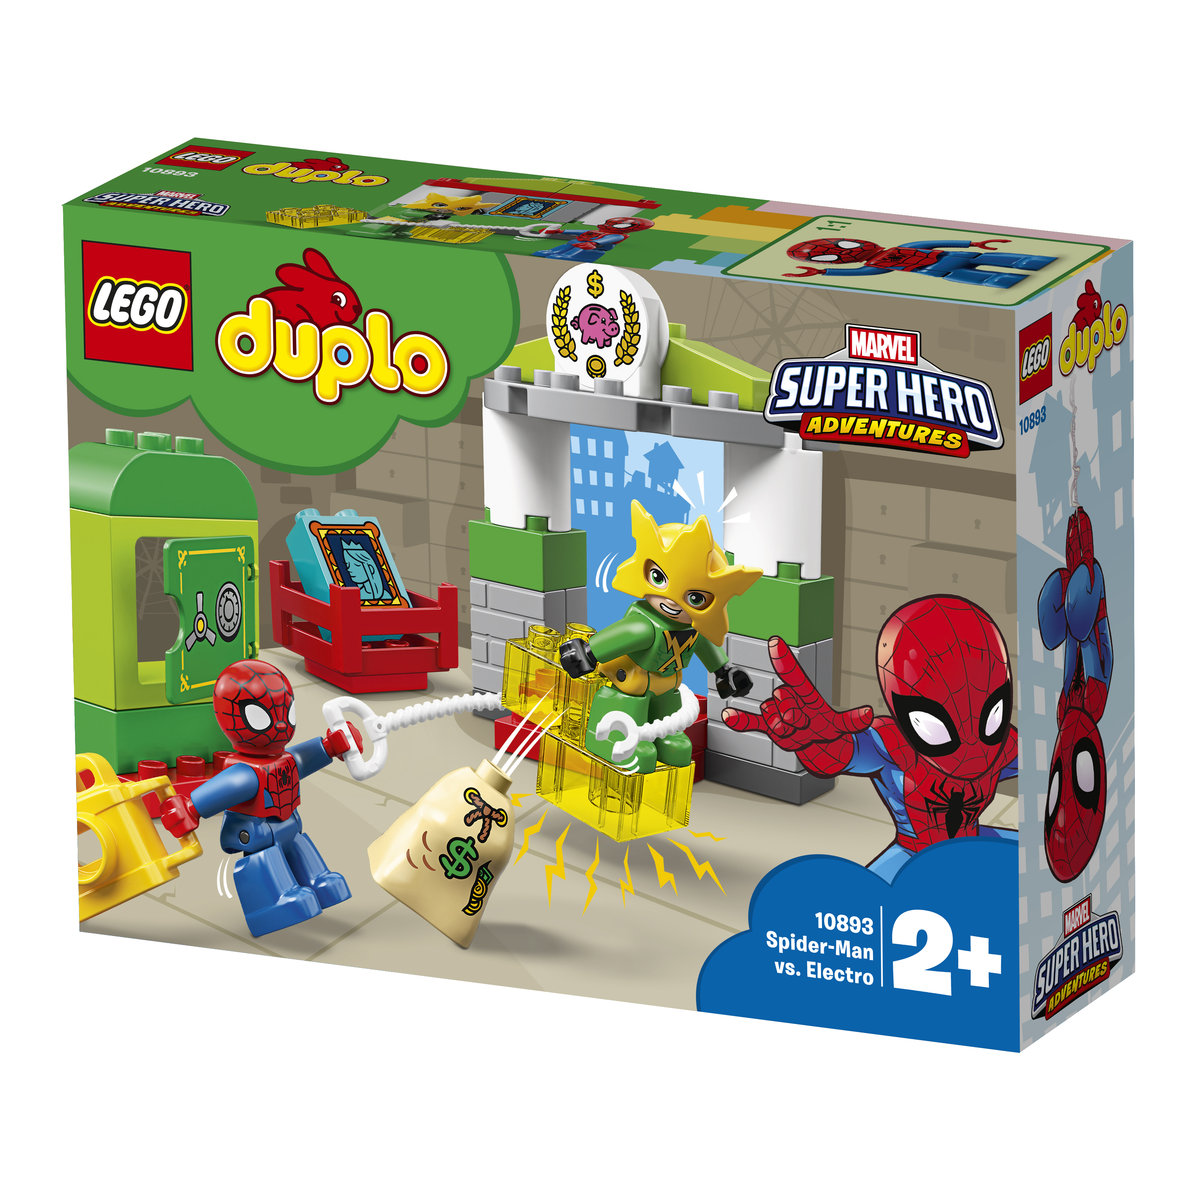 LEGO Duplo Spider-Man vs Electro 10893